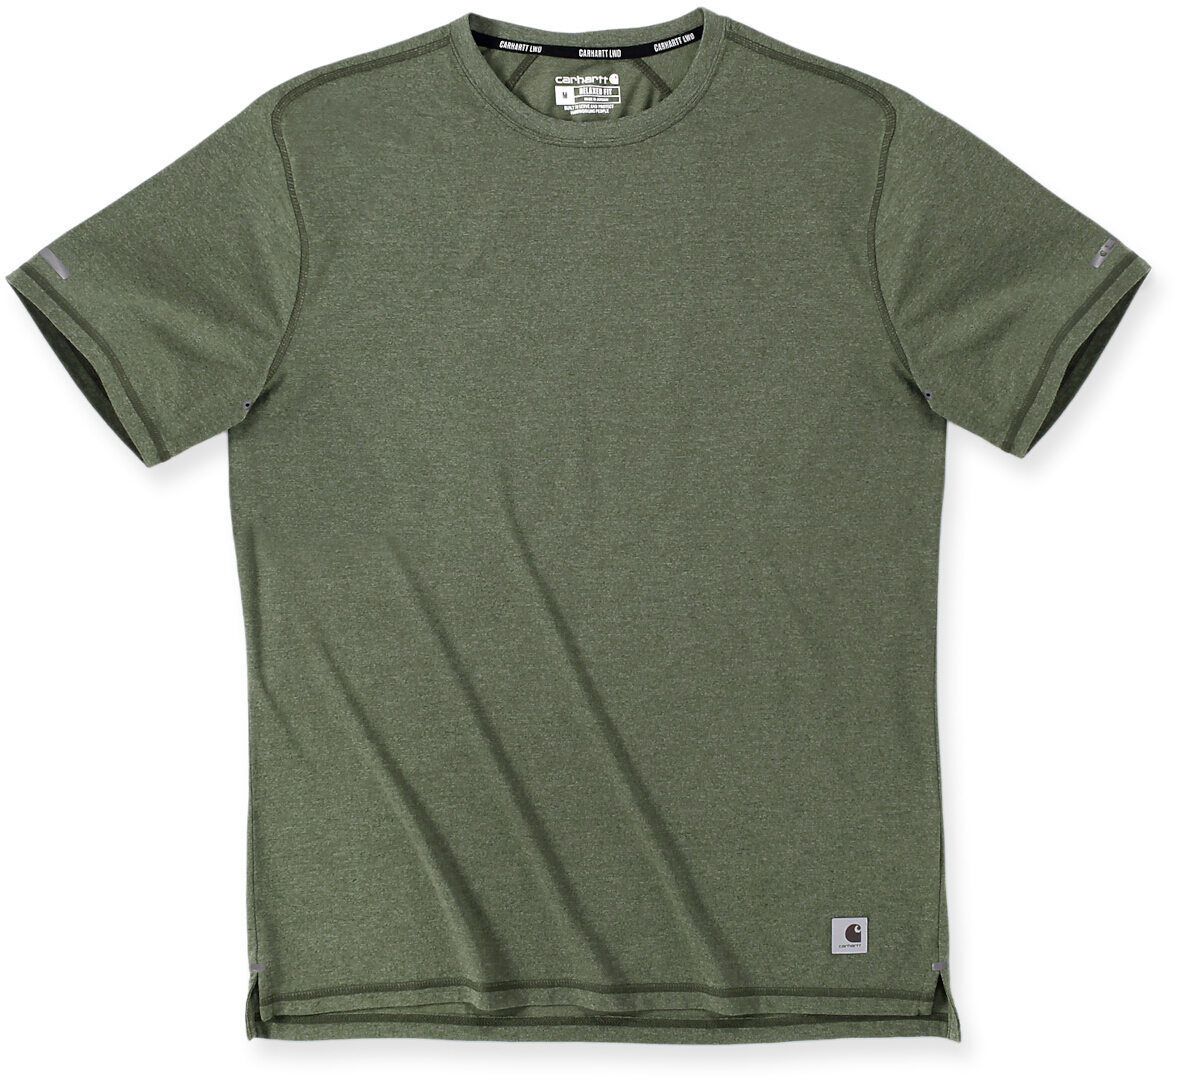 Carhartt Lightweight Durable Relaxed Fit Camiseta - Verde